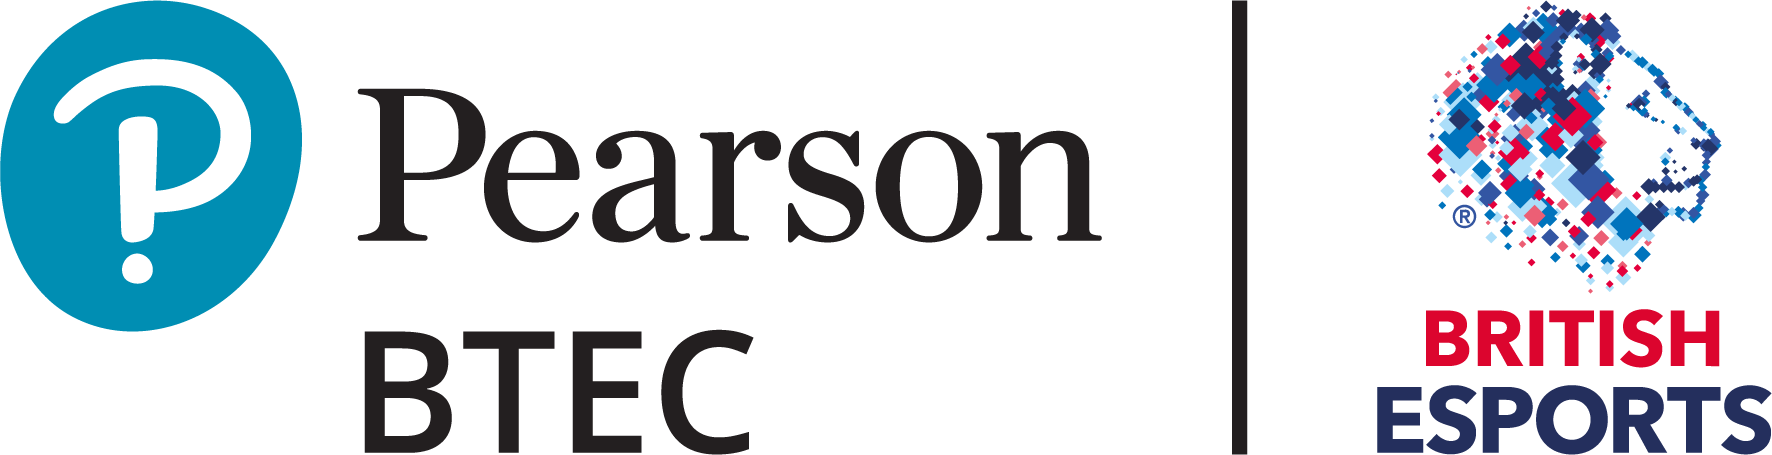 Pearson BTEC and British Esports logo